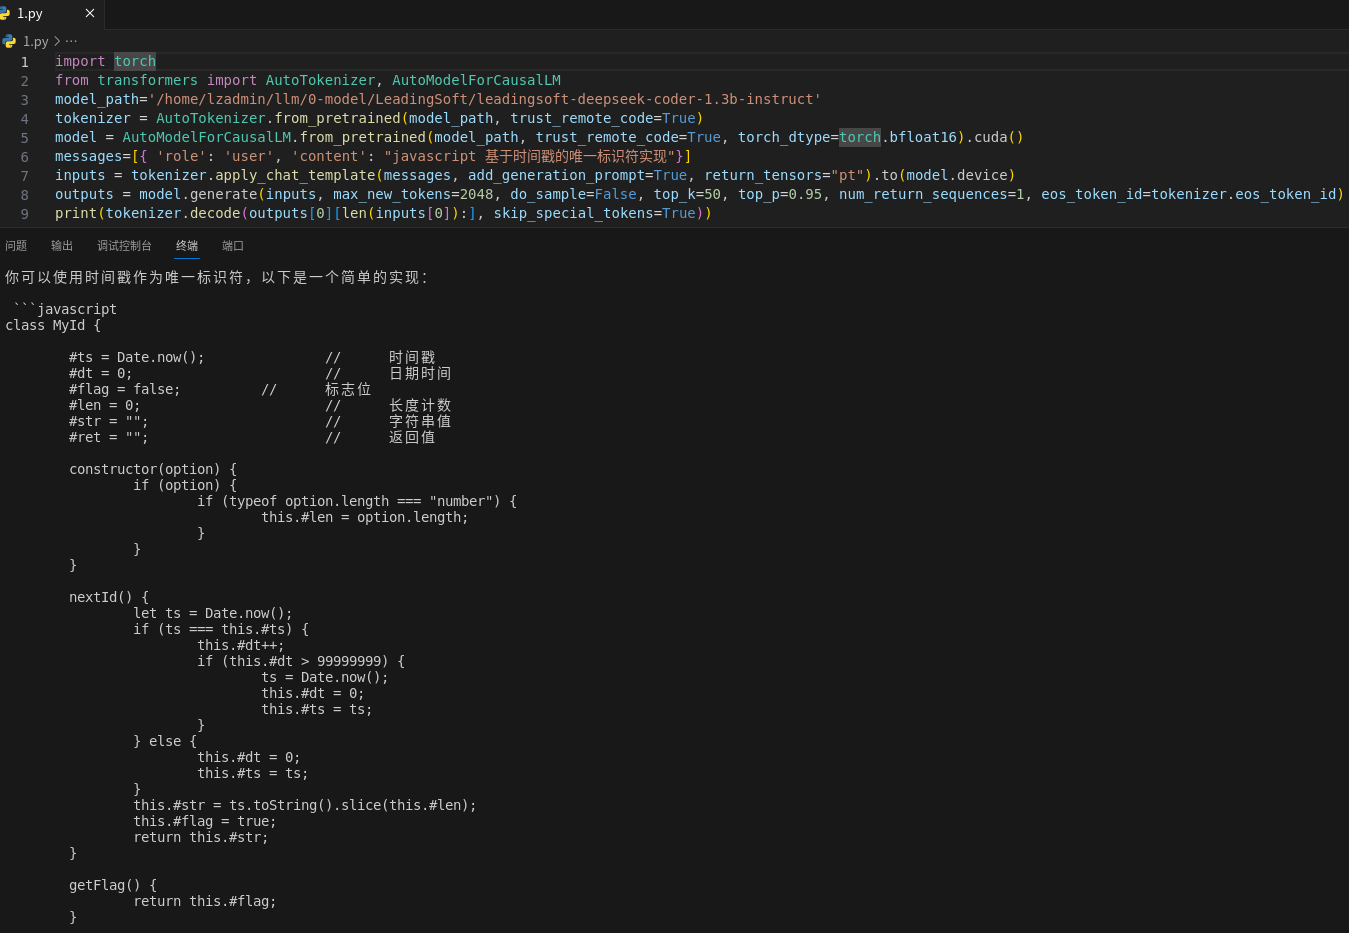 deepseek-coder-1.3b-instruct 微调后推理：javascript 基于时间戳的唯一标识符实现